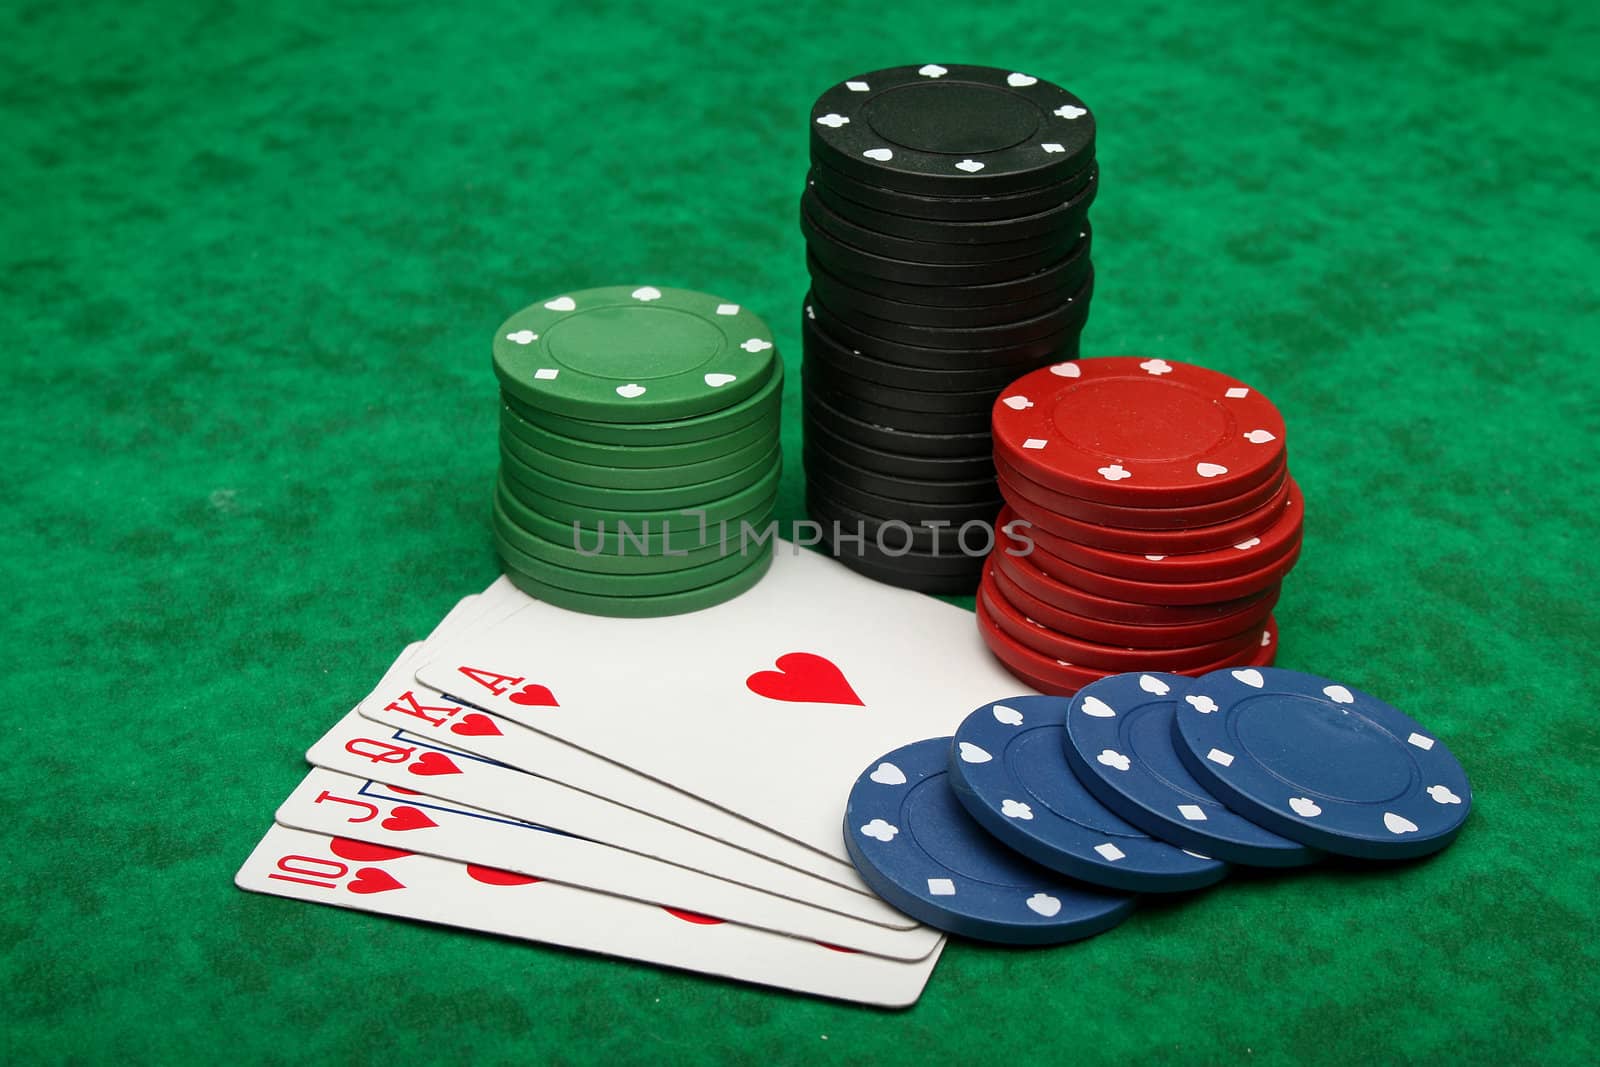 Royal Flush with gambling chips by Erdosain